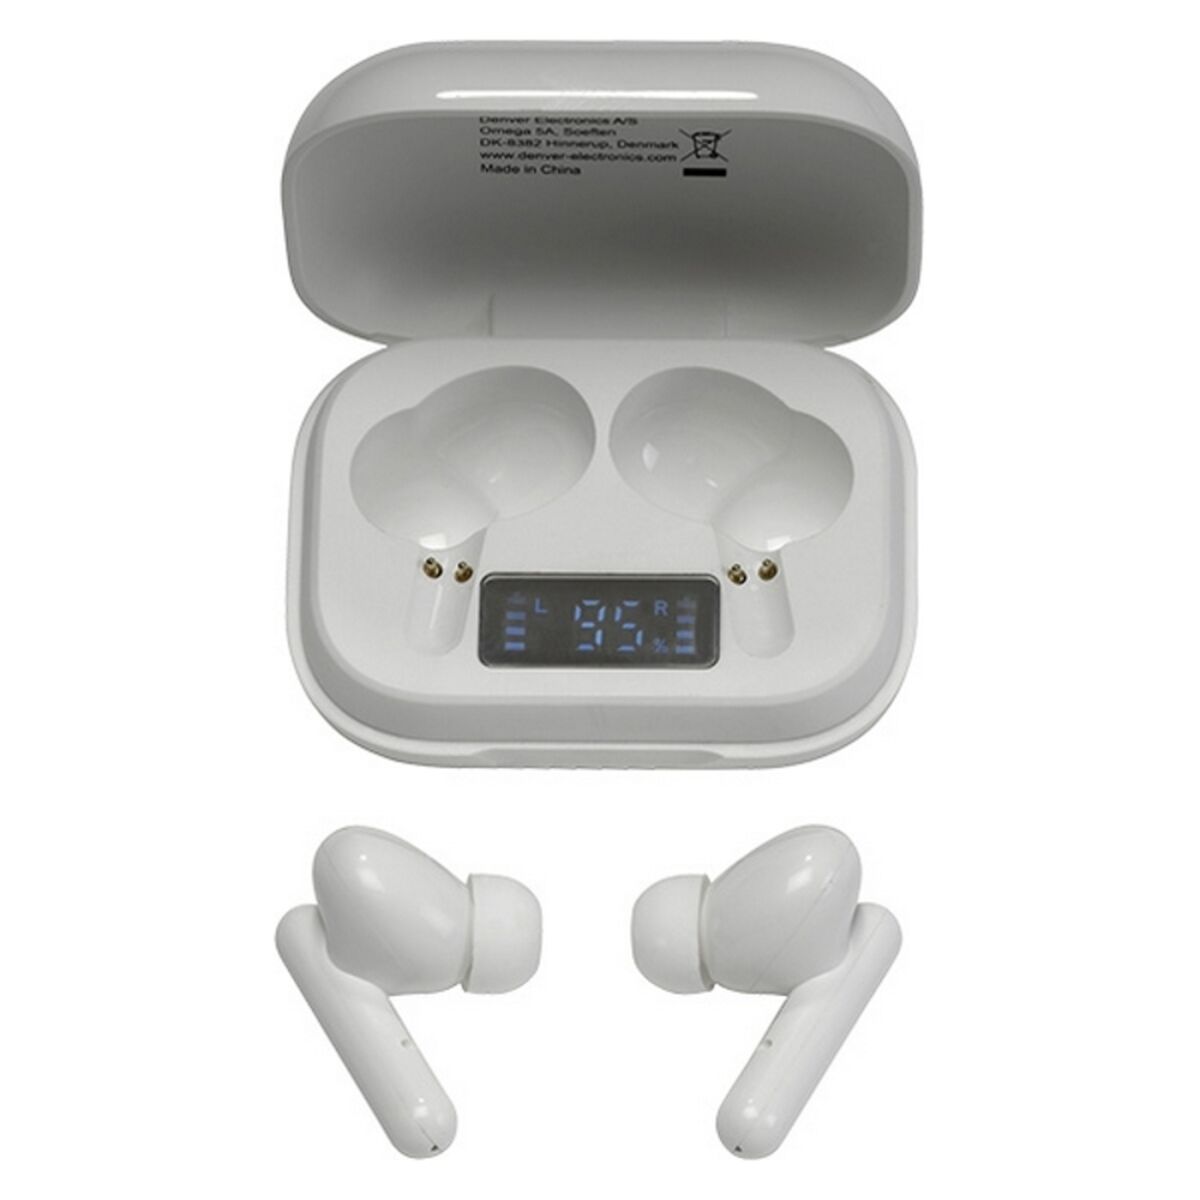 Bluetooth-Kopfhörer Denver Electronics 111191120210 Weiß - CA International  